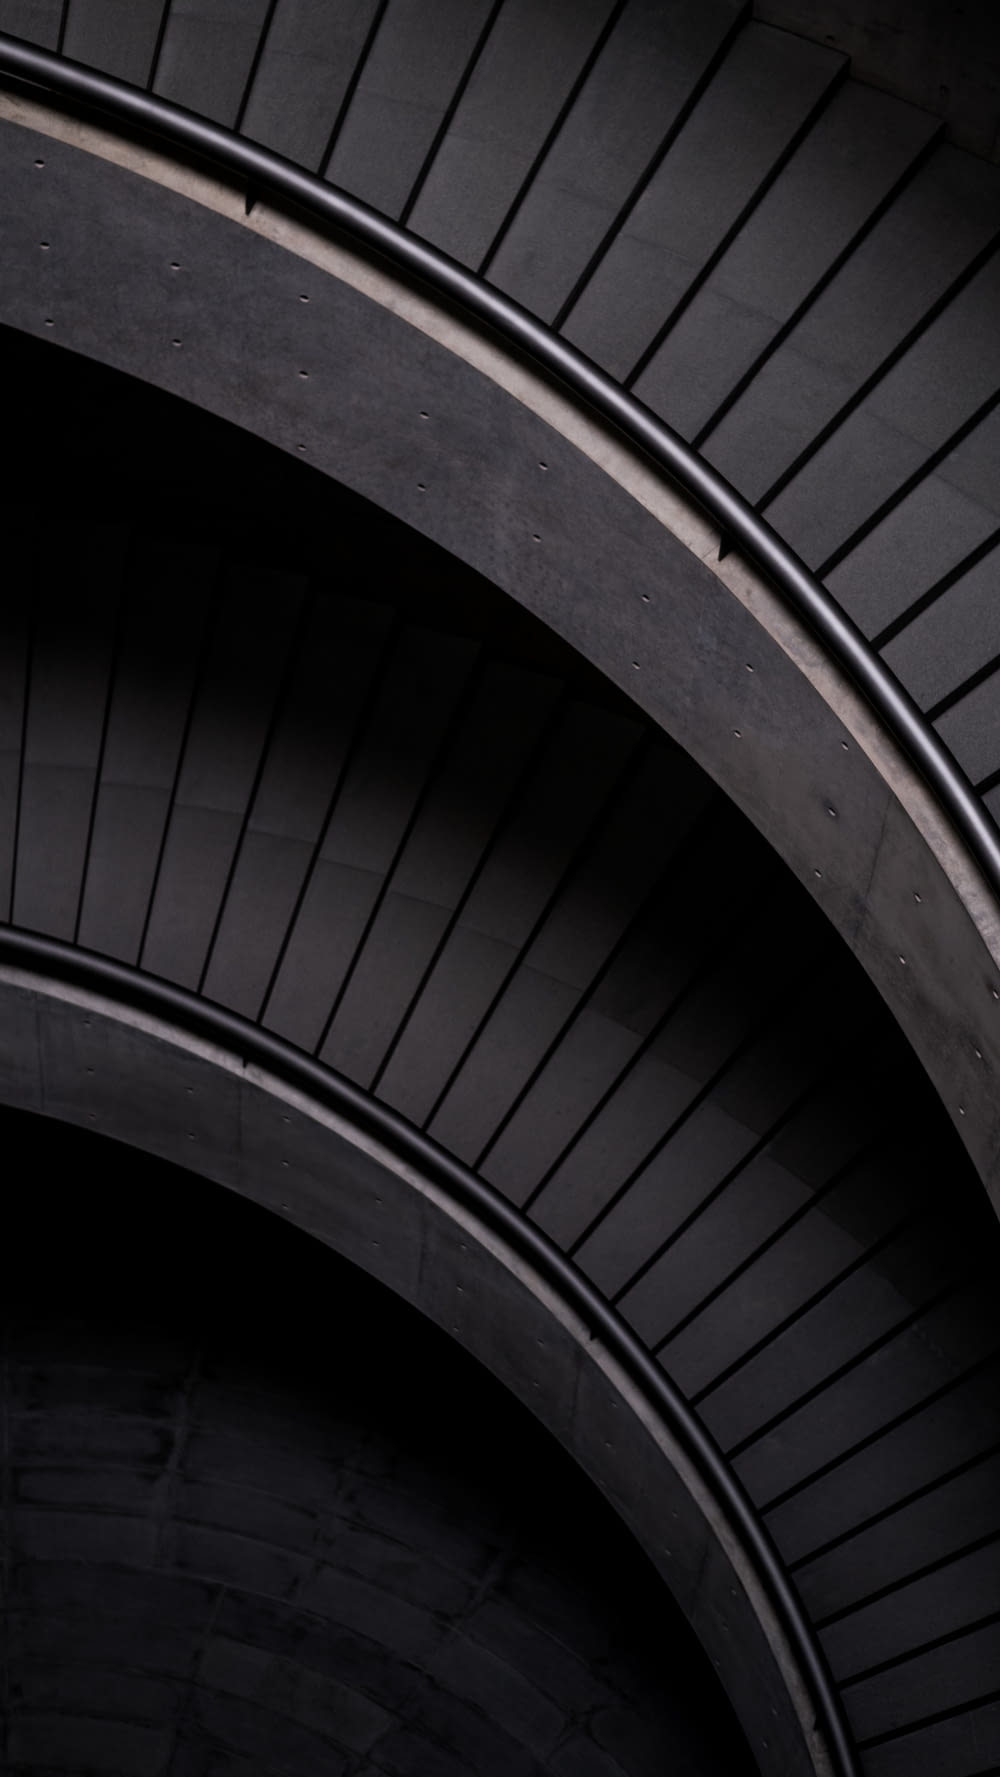 black spiral staircase with black metal railings